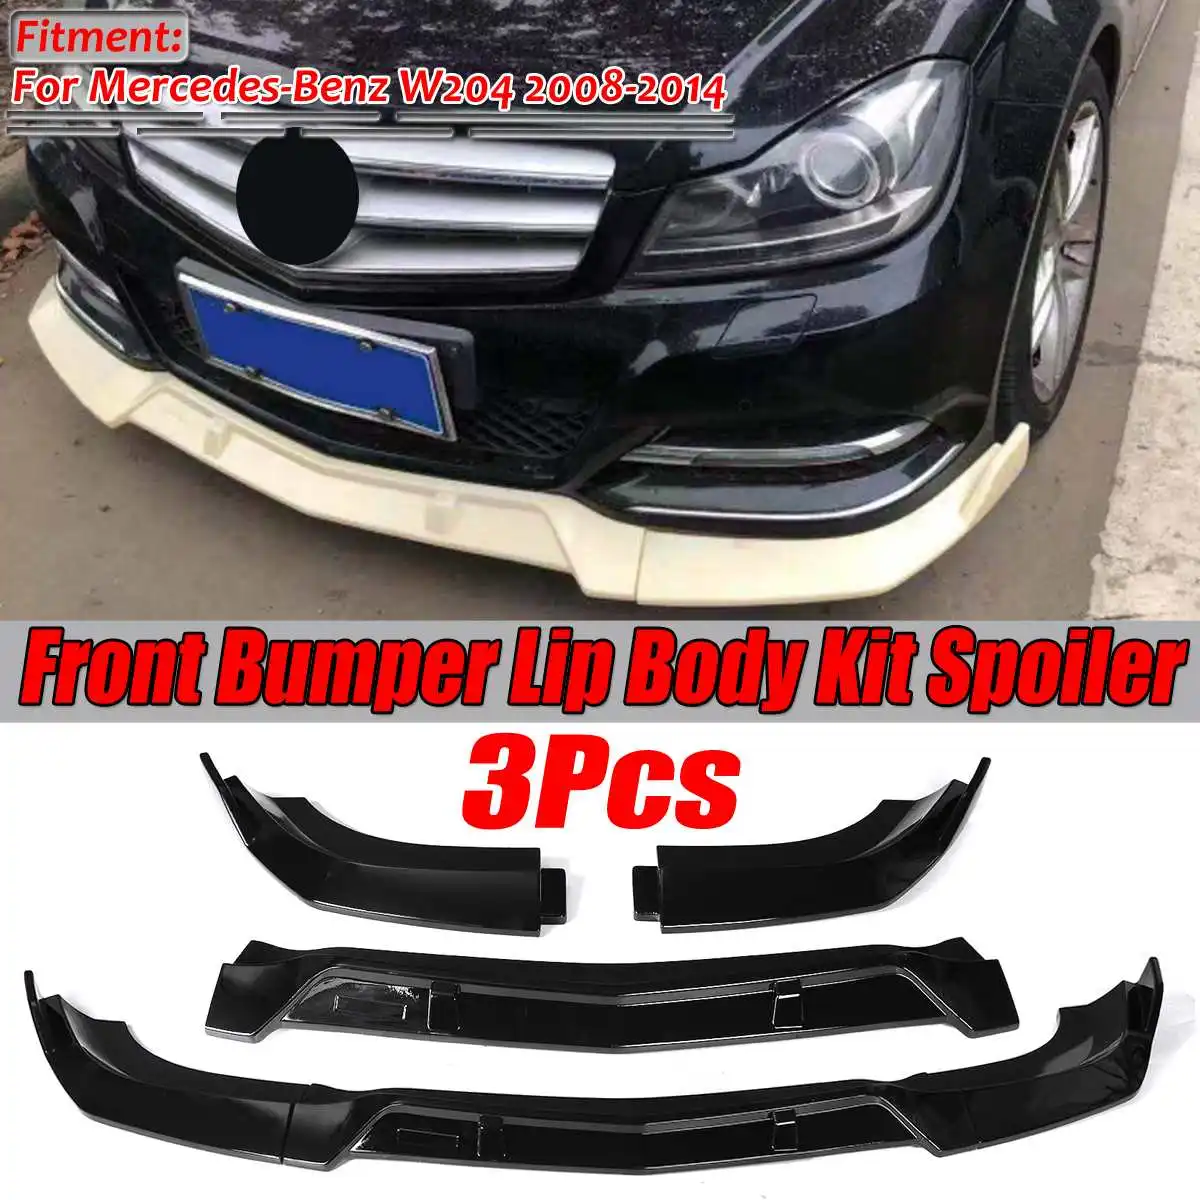 W204 Car Front Bumper Spoiler Lip Splitter Body Kit Diffuser Guard For Mercedes-Benz W204 C180 C200 C250 C300 C350 2008-2014